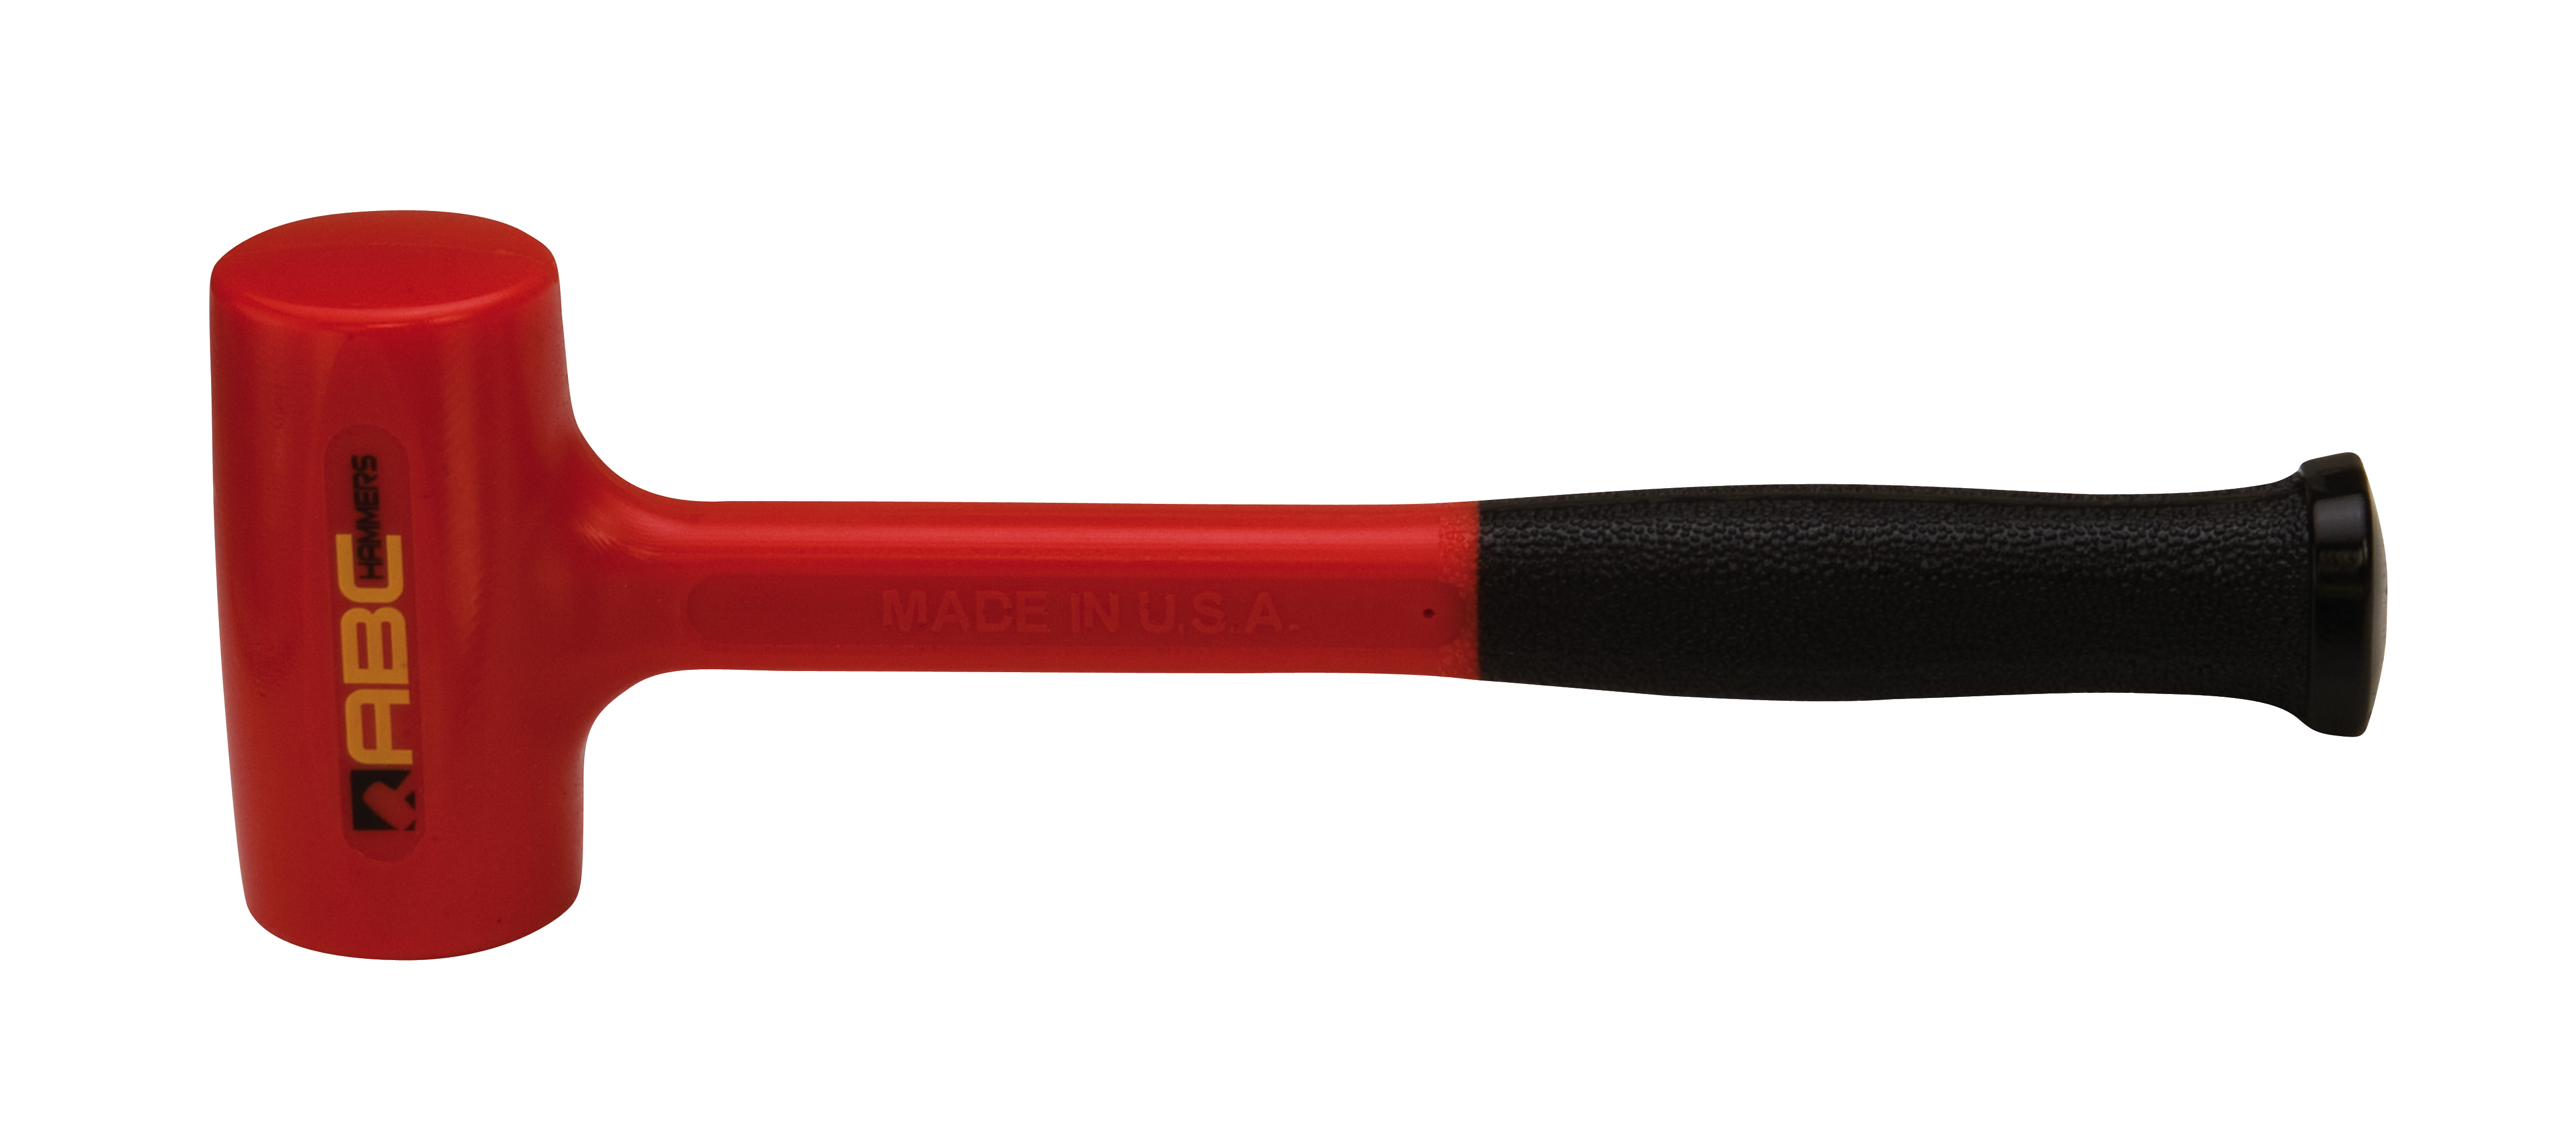 26 oz. Polyurethane Dead Blow Hammer - Overall Length 12.75"